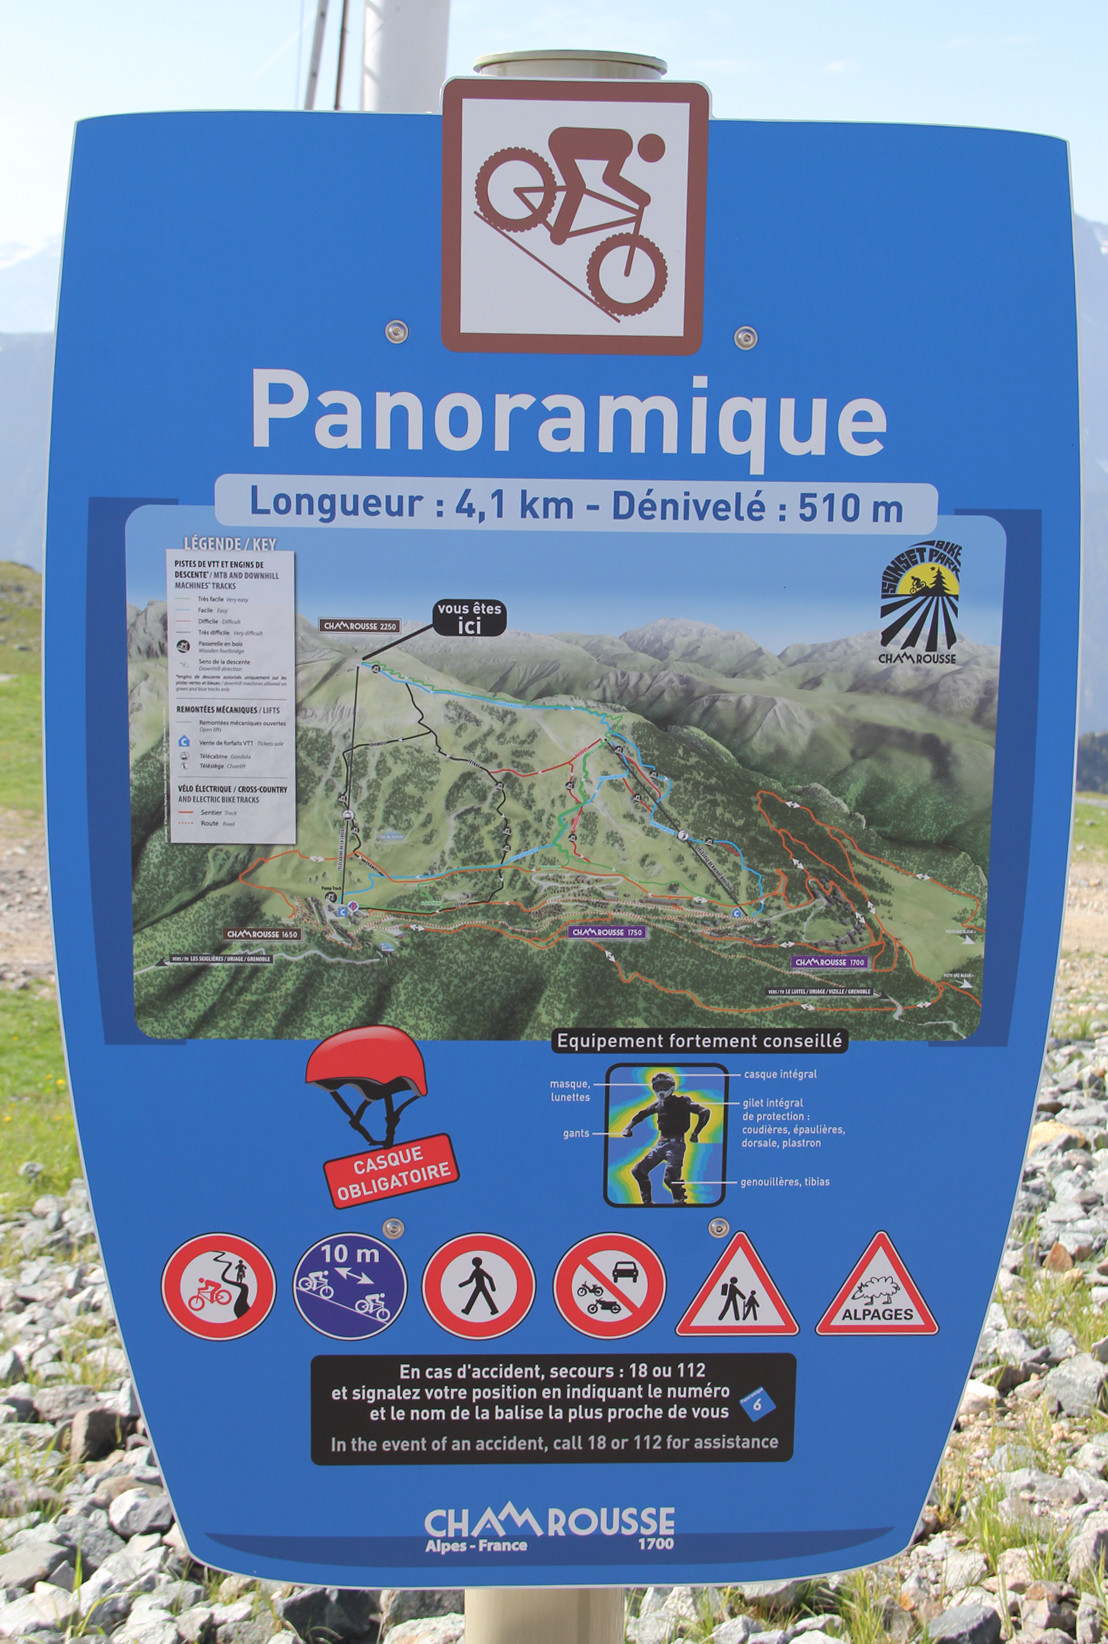 Chamrousse Panoramique MTB track